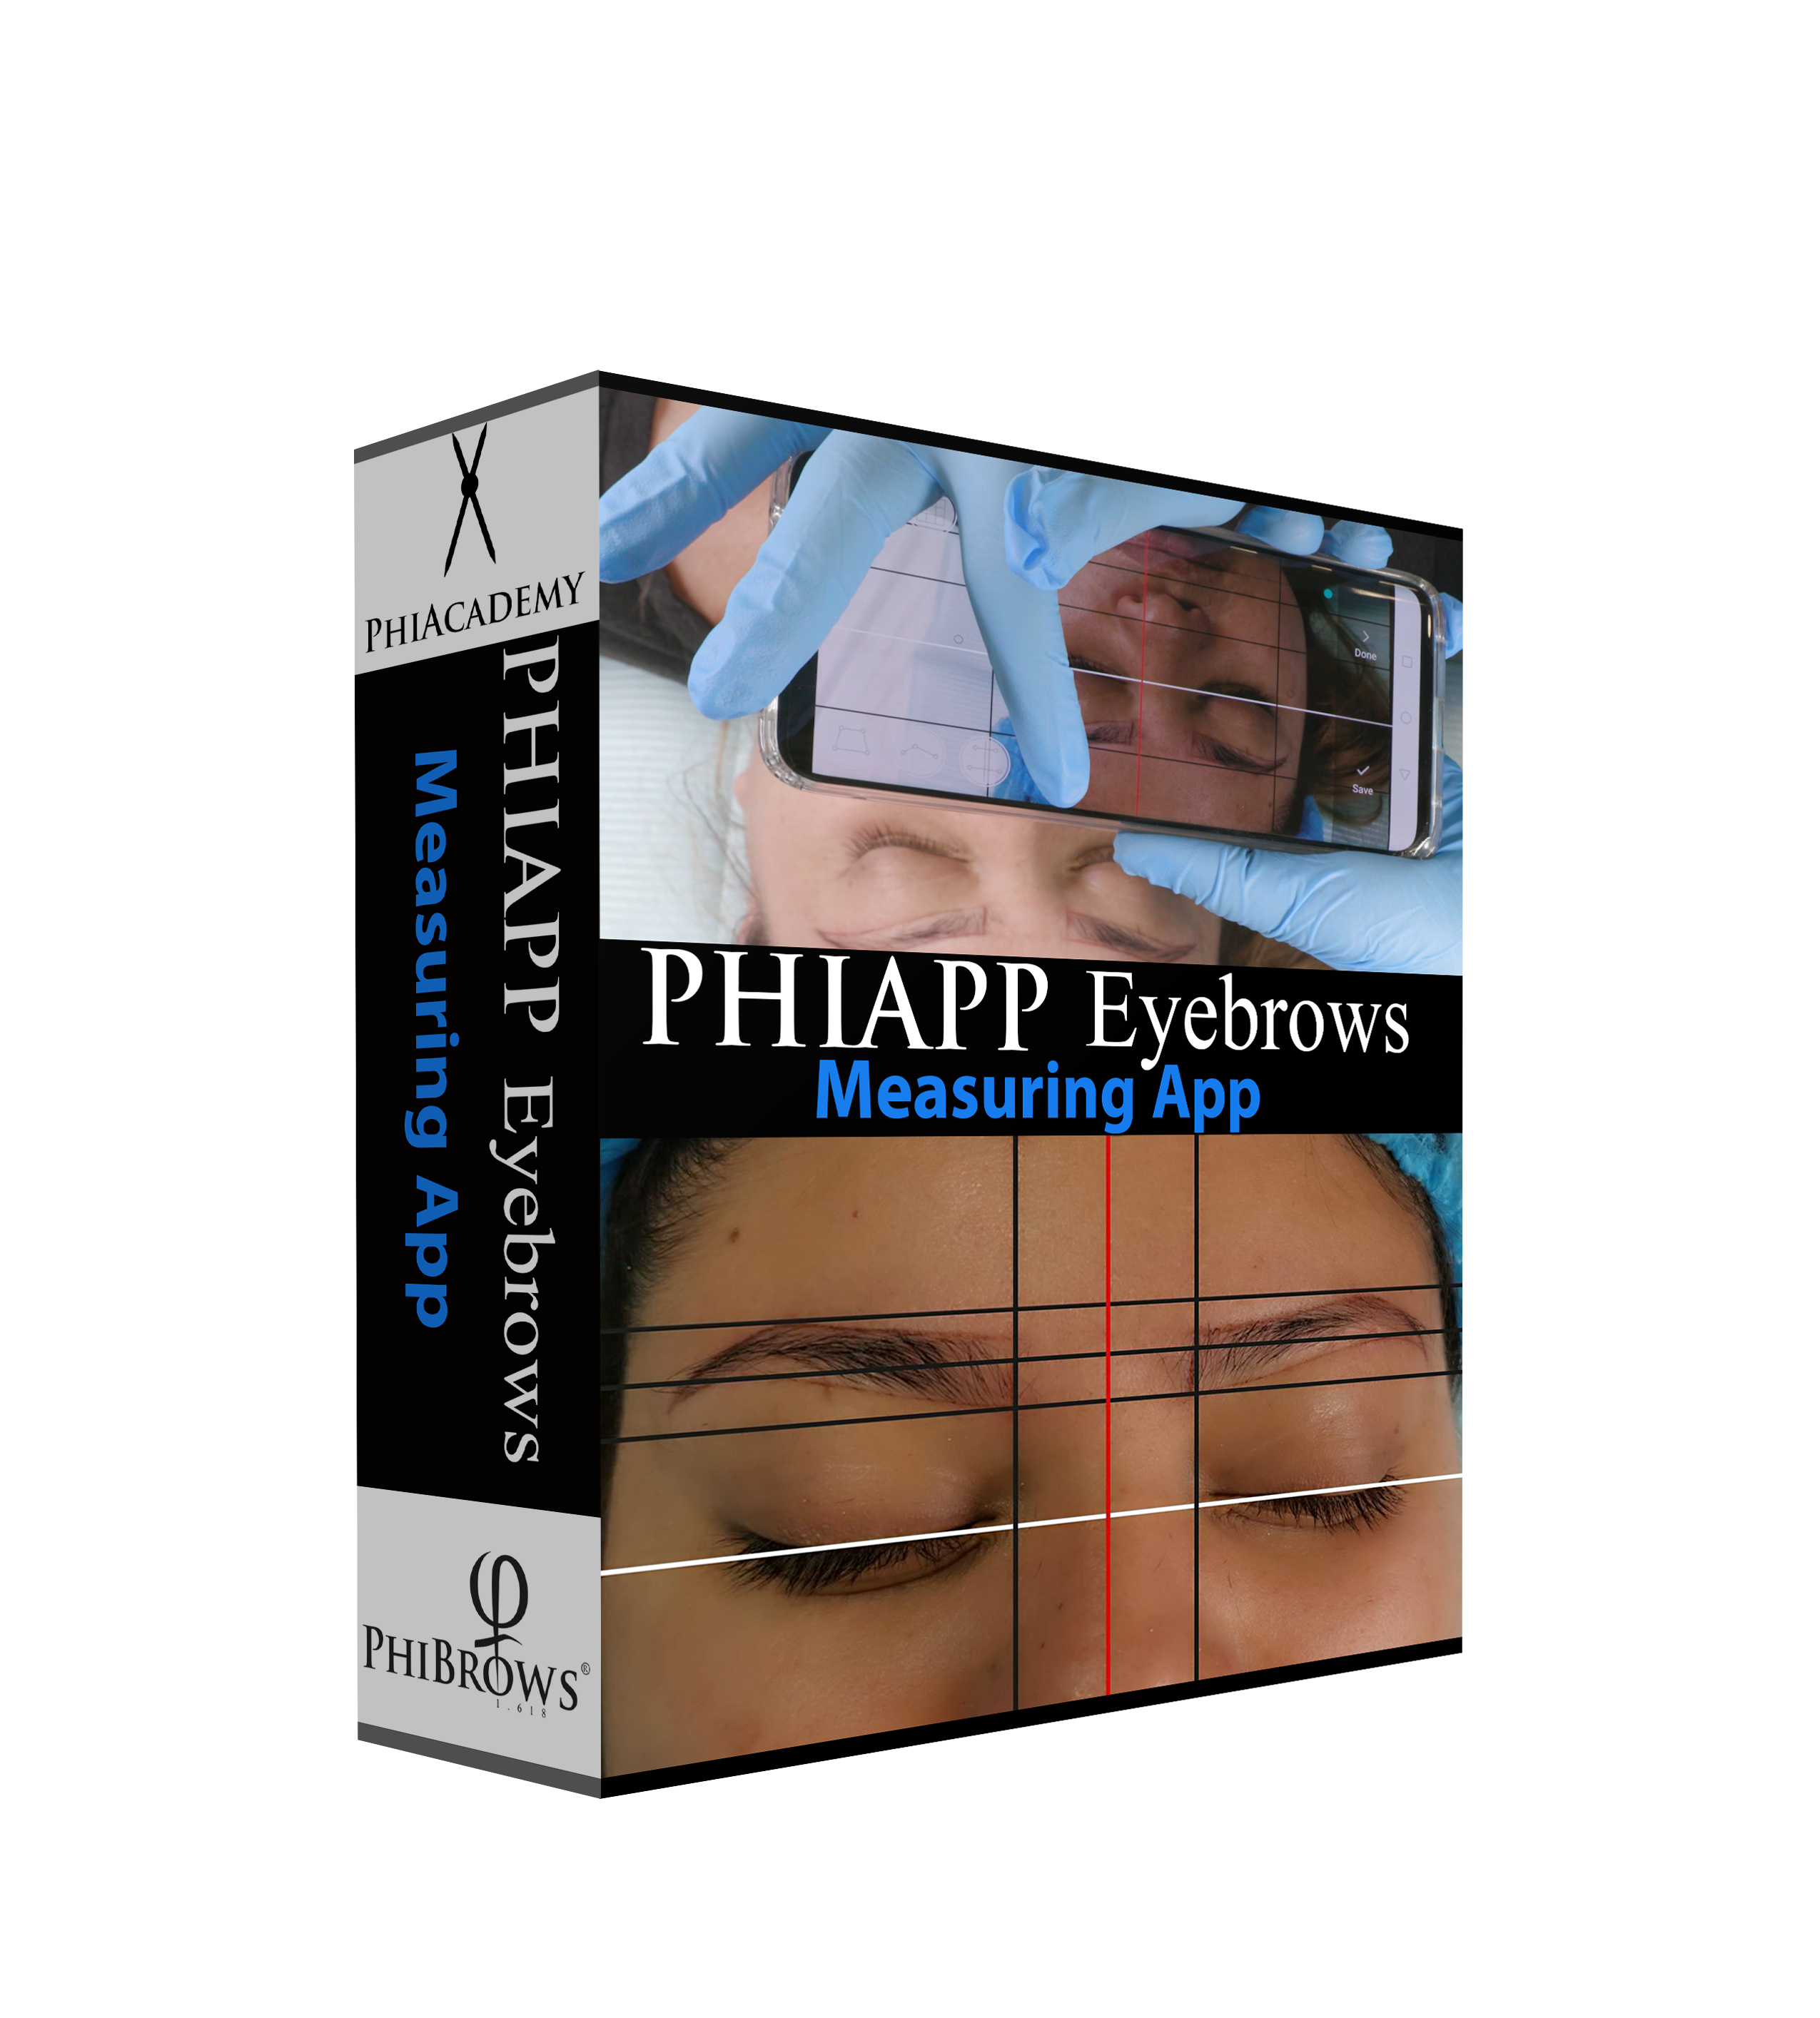 PHIAPP Eyebrows measuring app